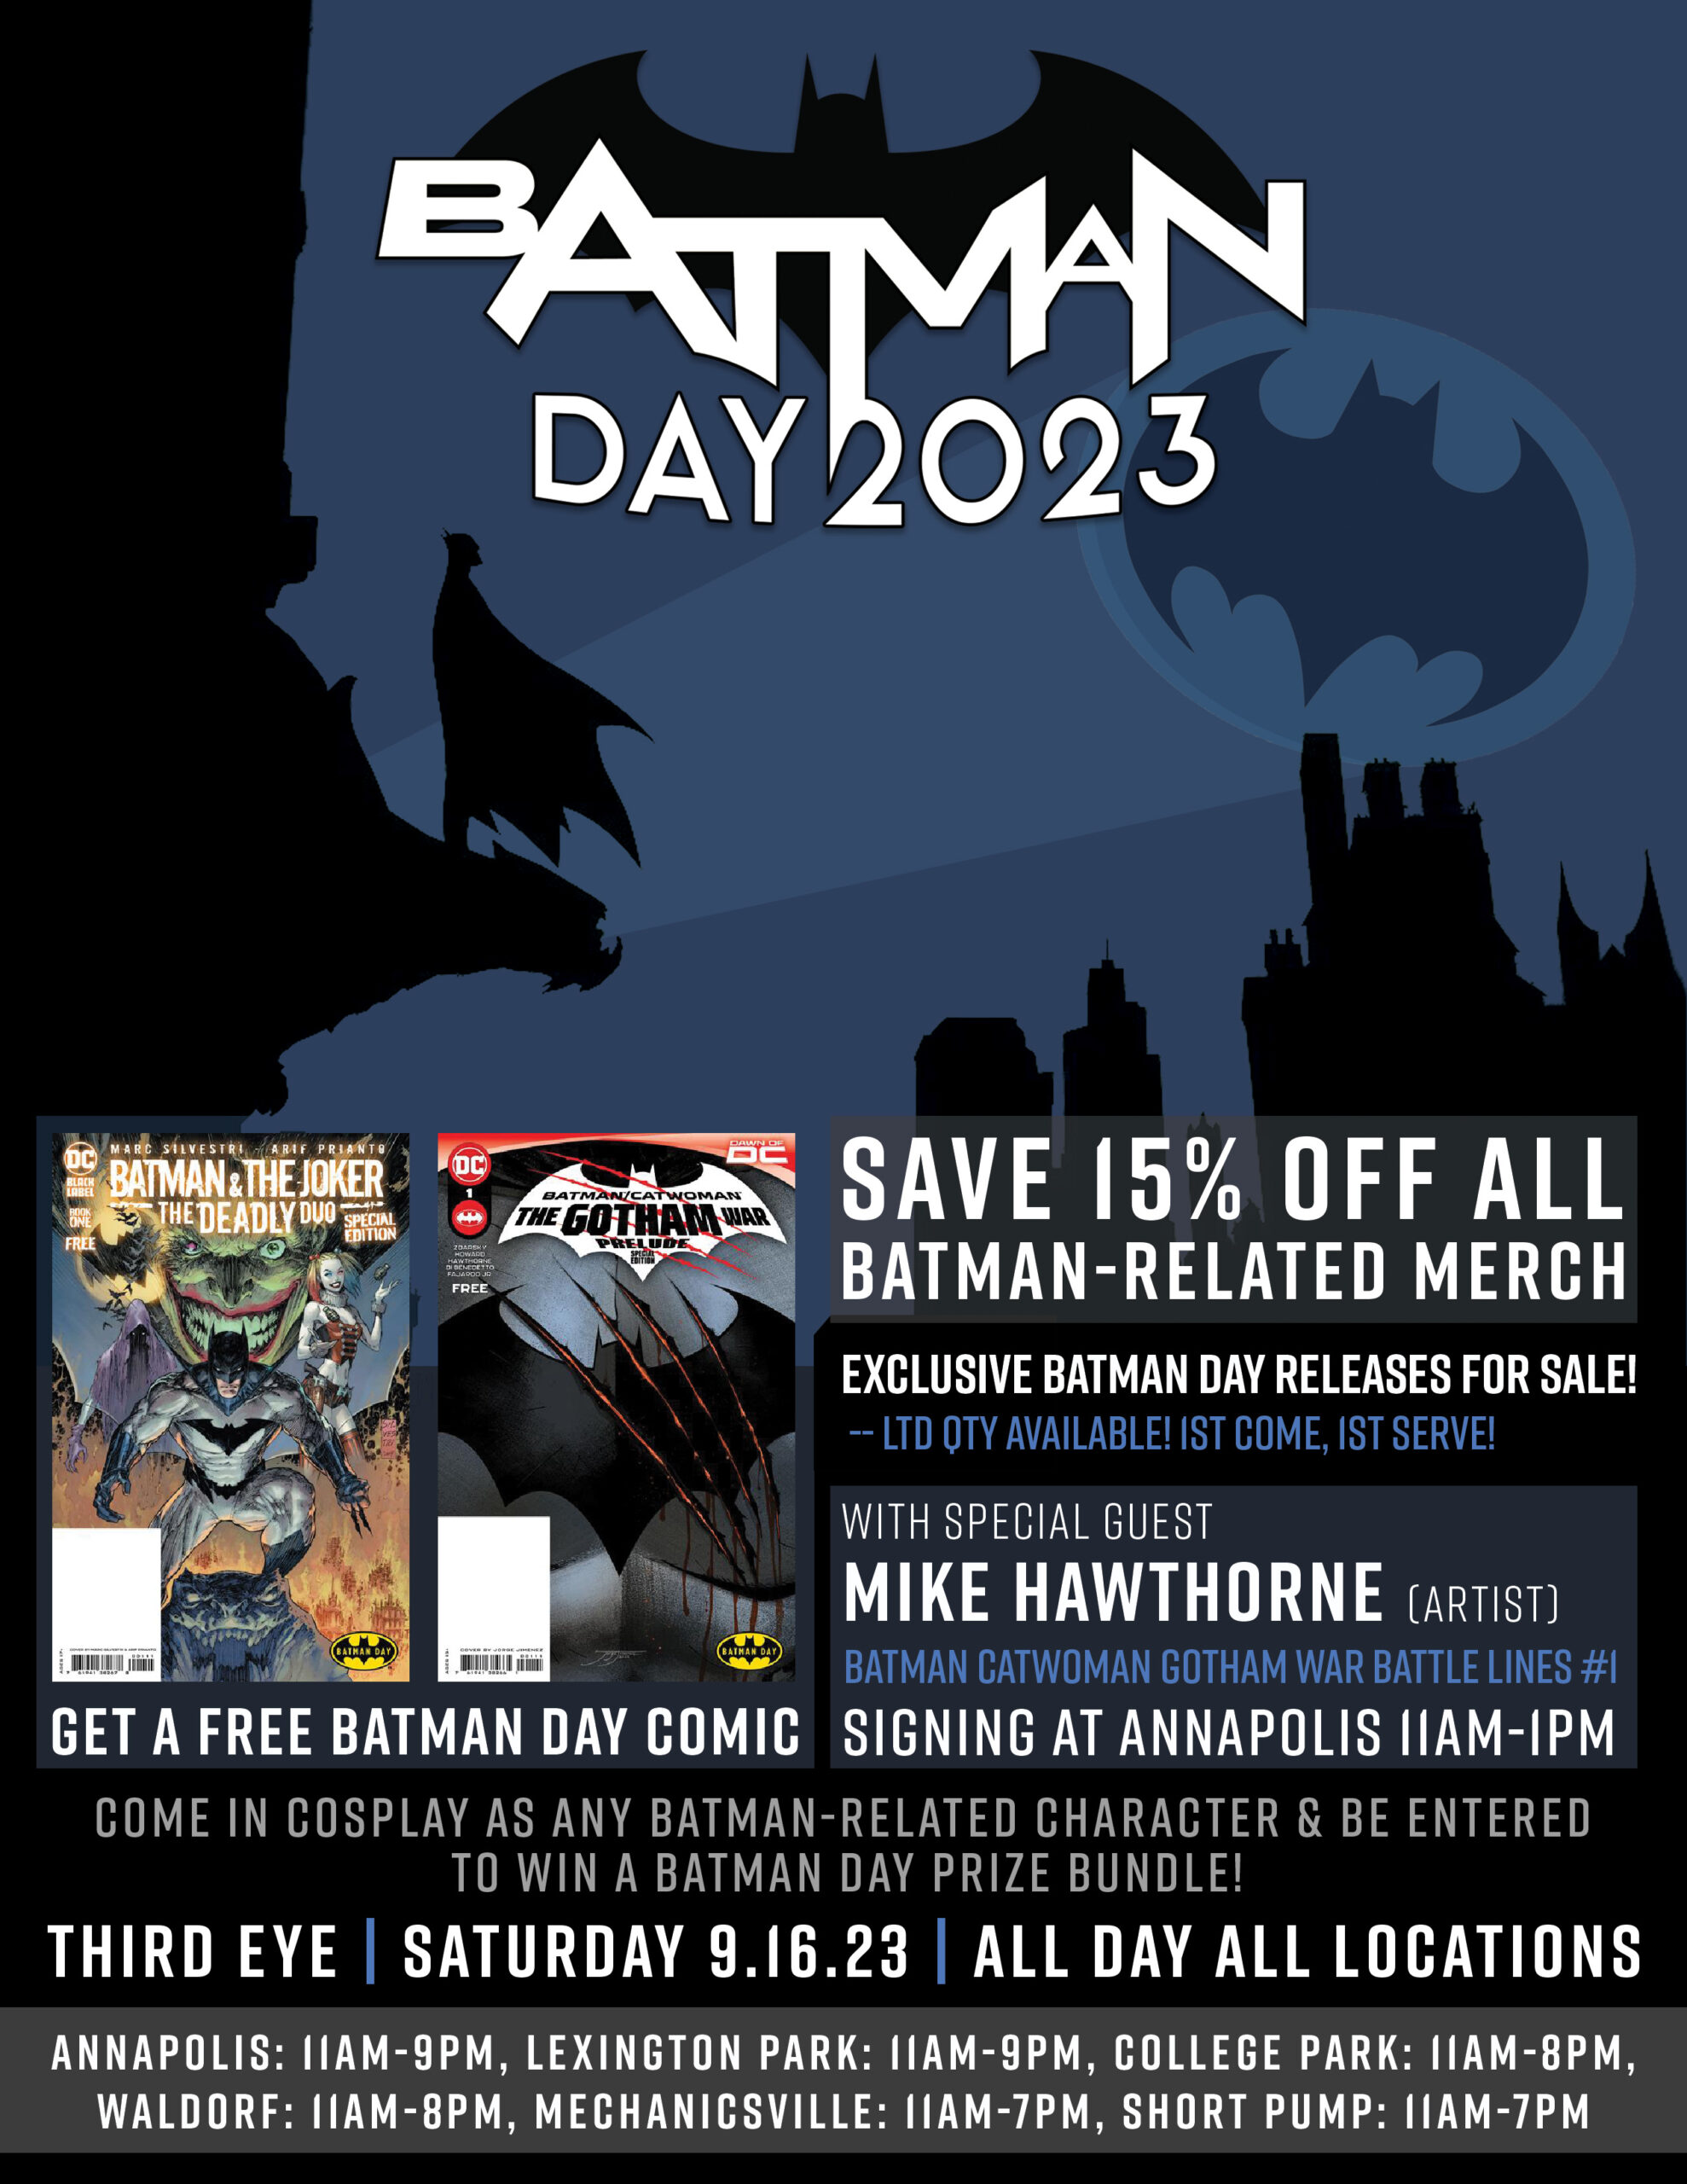 SAT 9/16/23 BATMAN DAY 2023 AT THIRD EYE Third Eye Comics & Hobbies